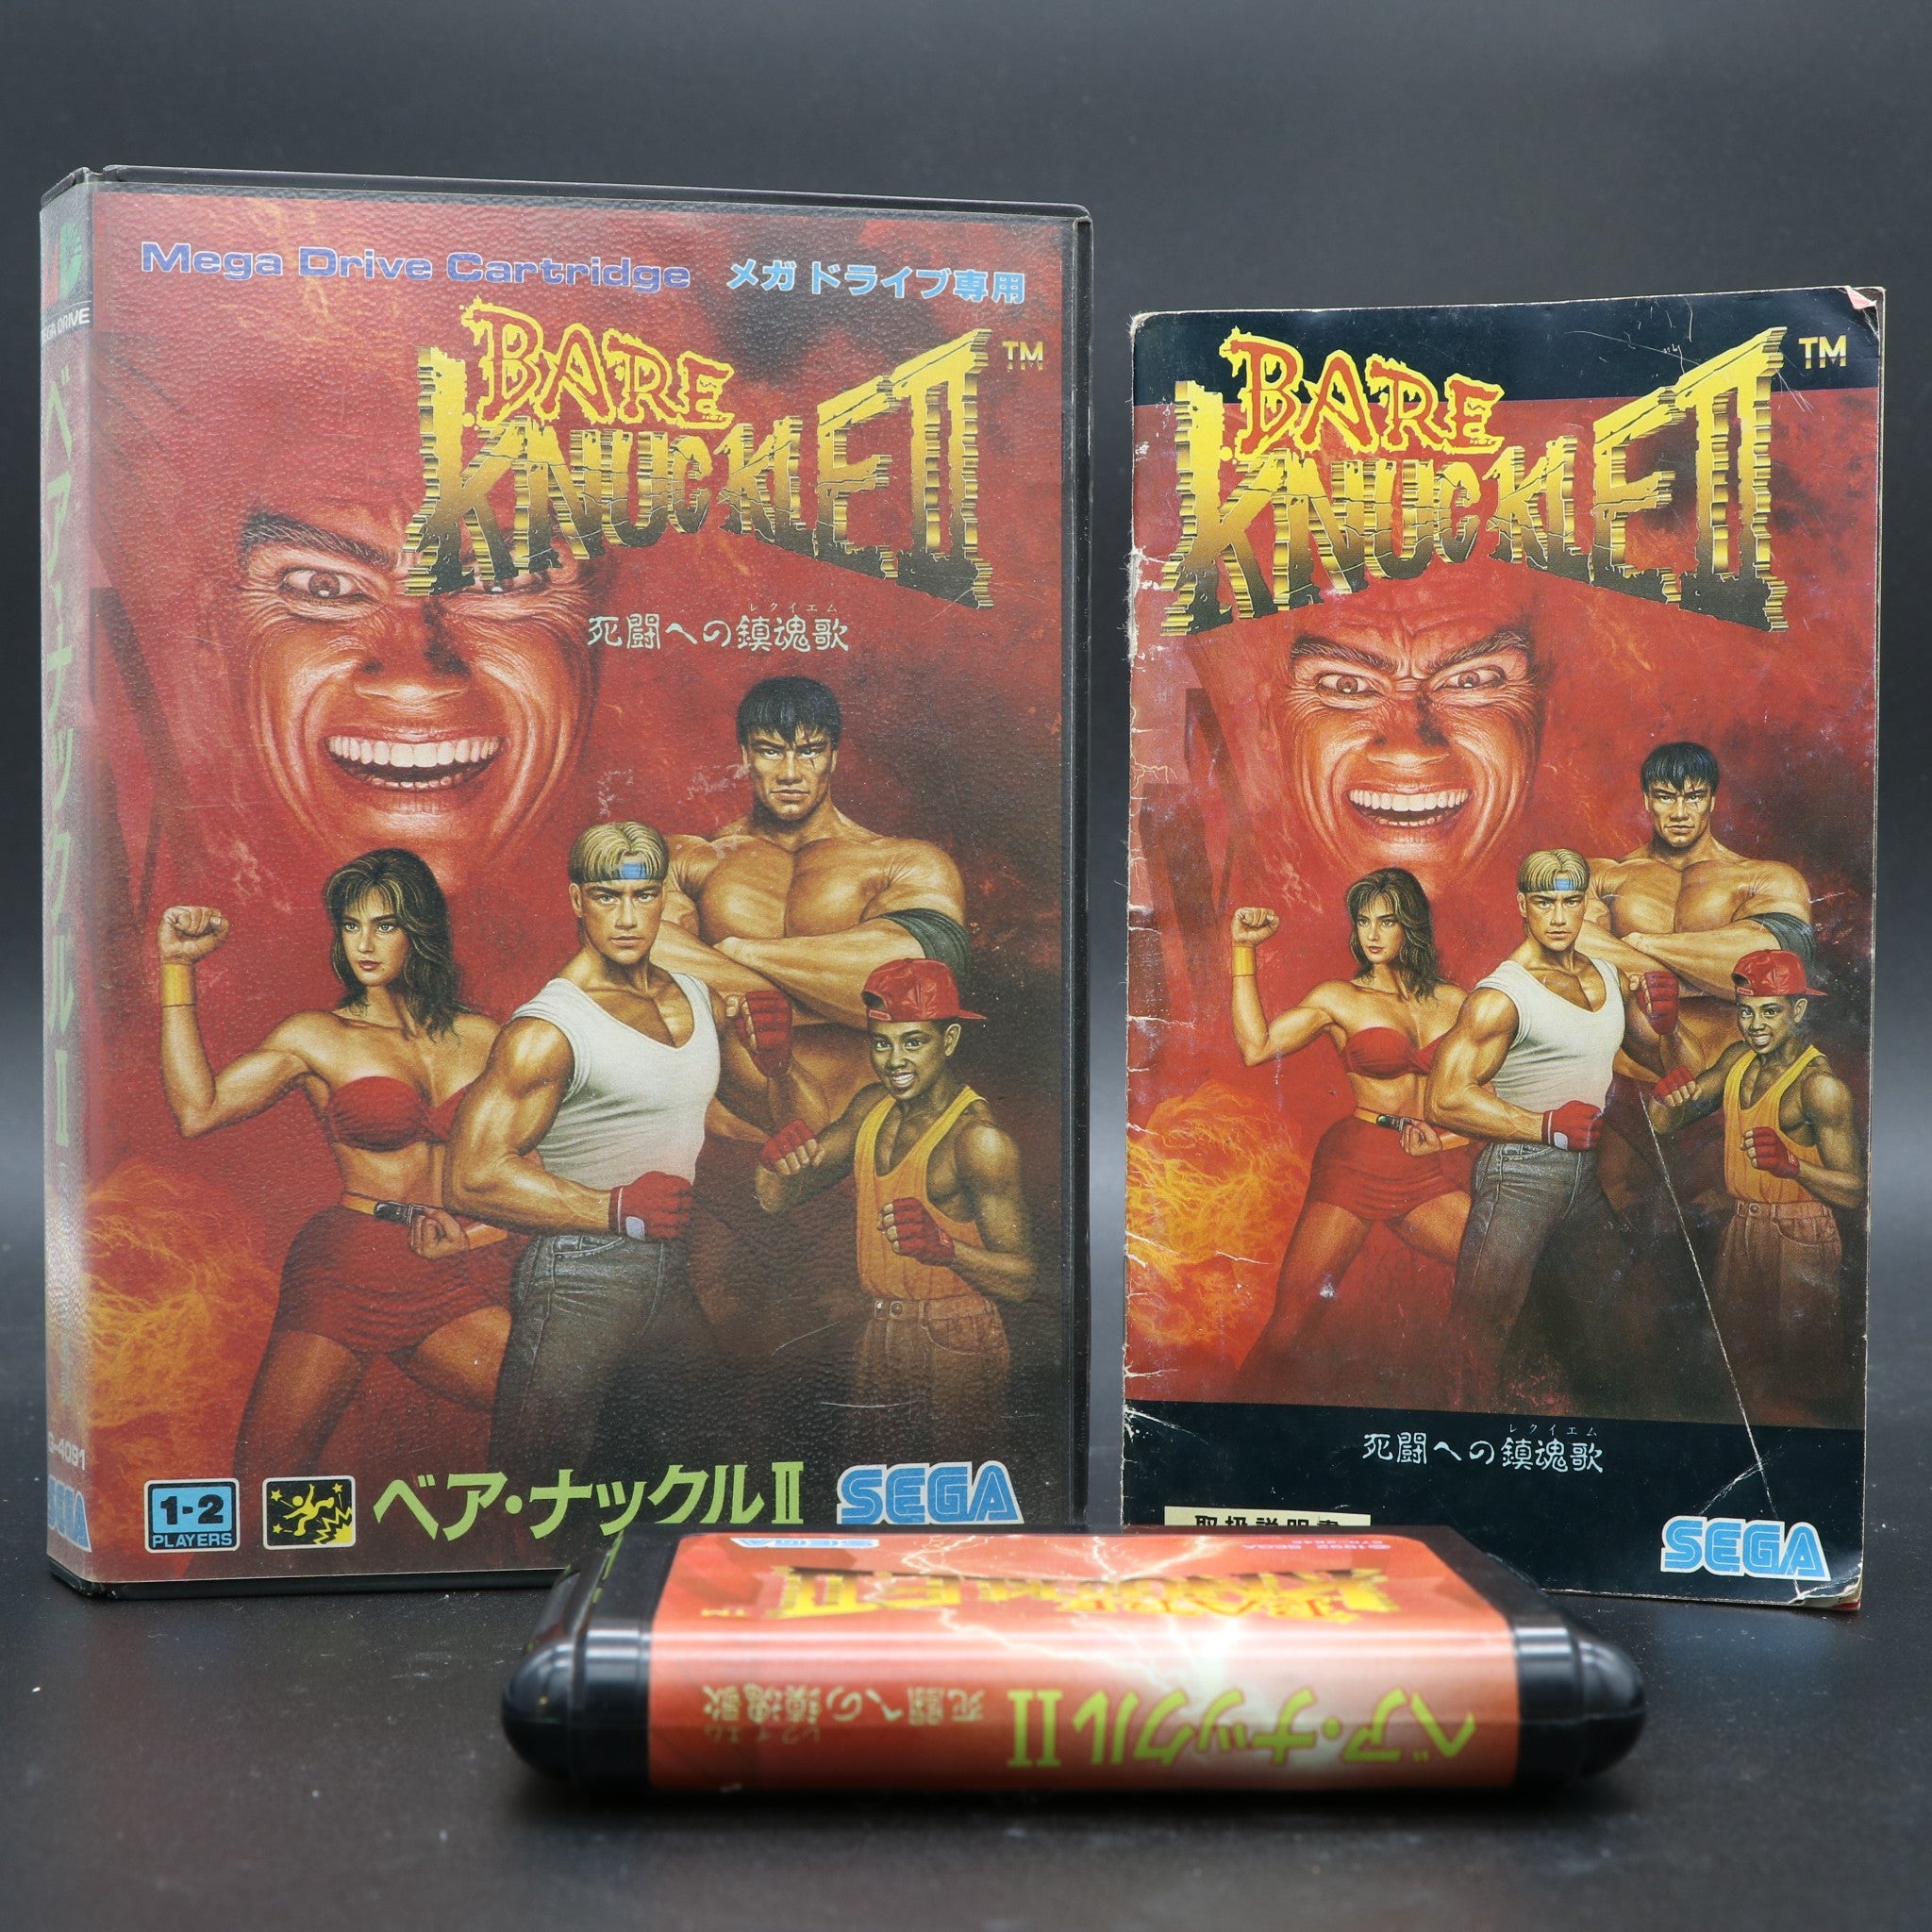 Bare Knuckle II - Sega Mega Drive Game - Japanese Version - Boxed & Complete